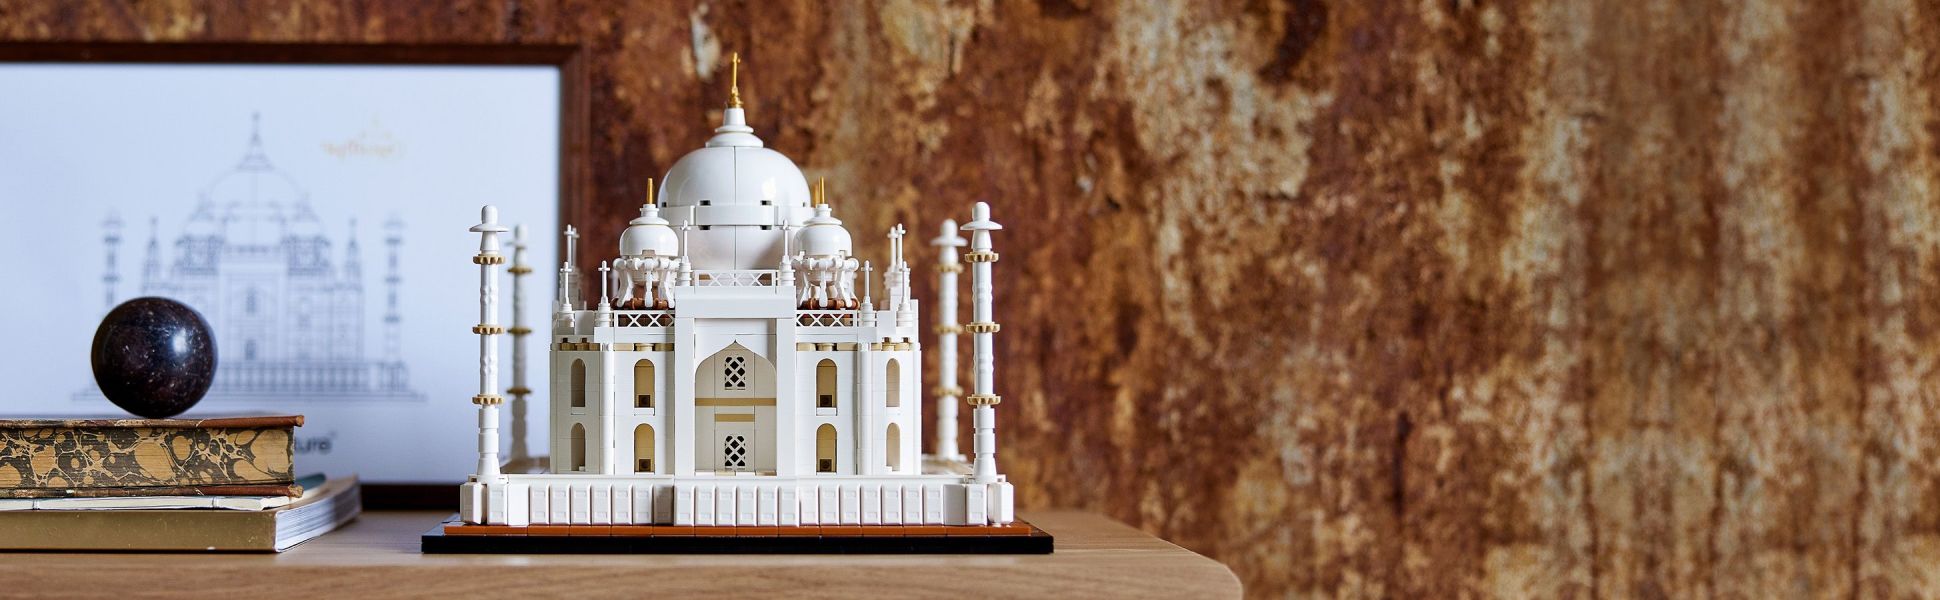 LEGO Architecture Taj Mahal 21056 Building Set - Landmarks